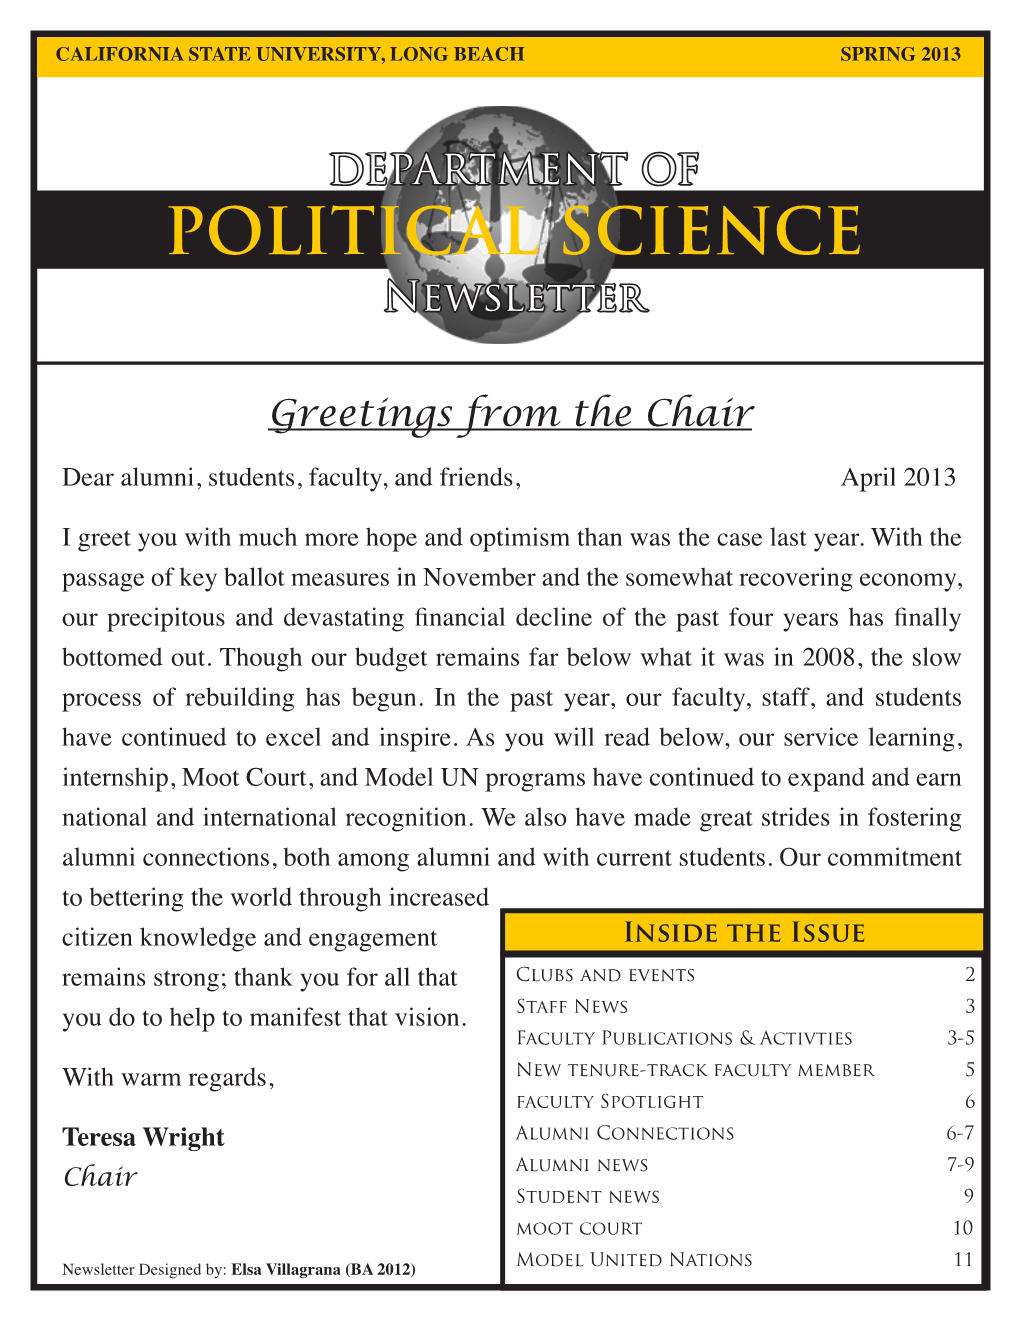 POLITICAL SCIENCE Newsletter